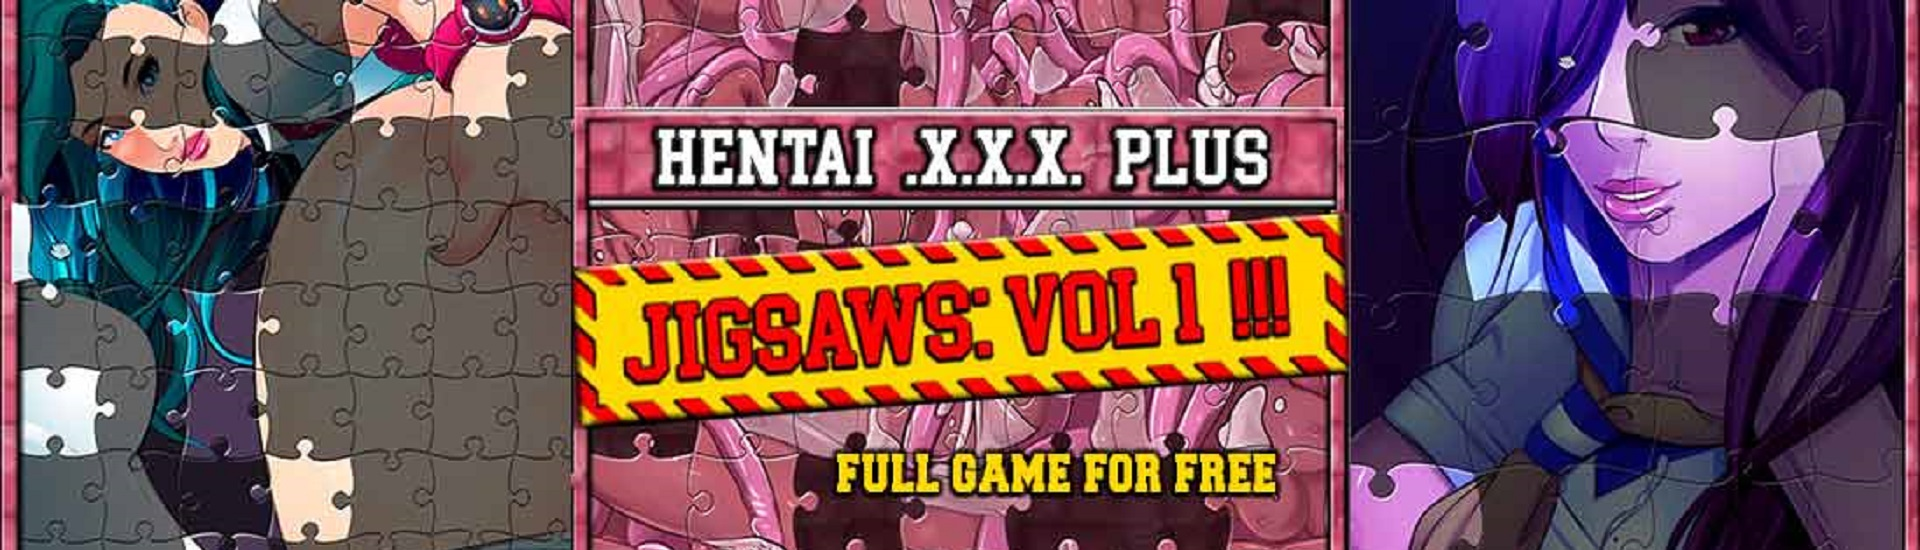 [winsows]indiegala’s-free-game-–-hentai-xxx-plus:-jigsaws-vol-1-[nsfw]